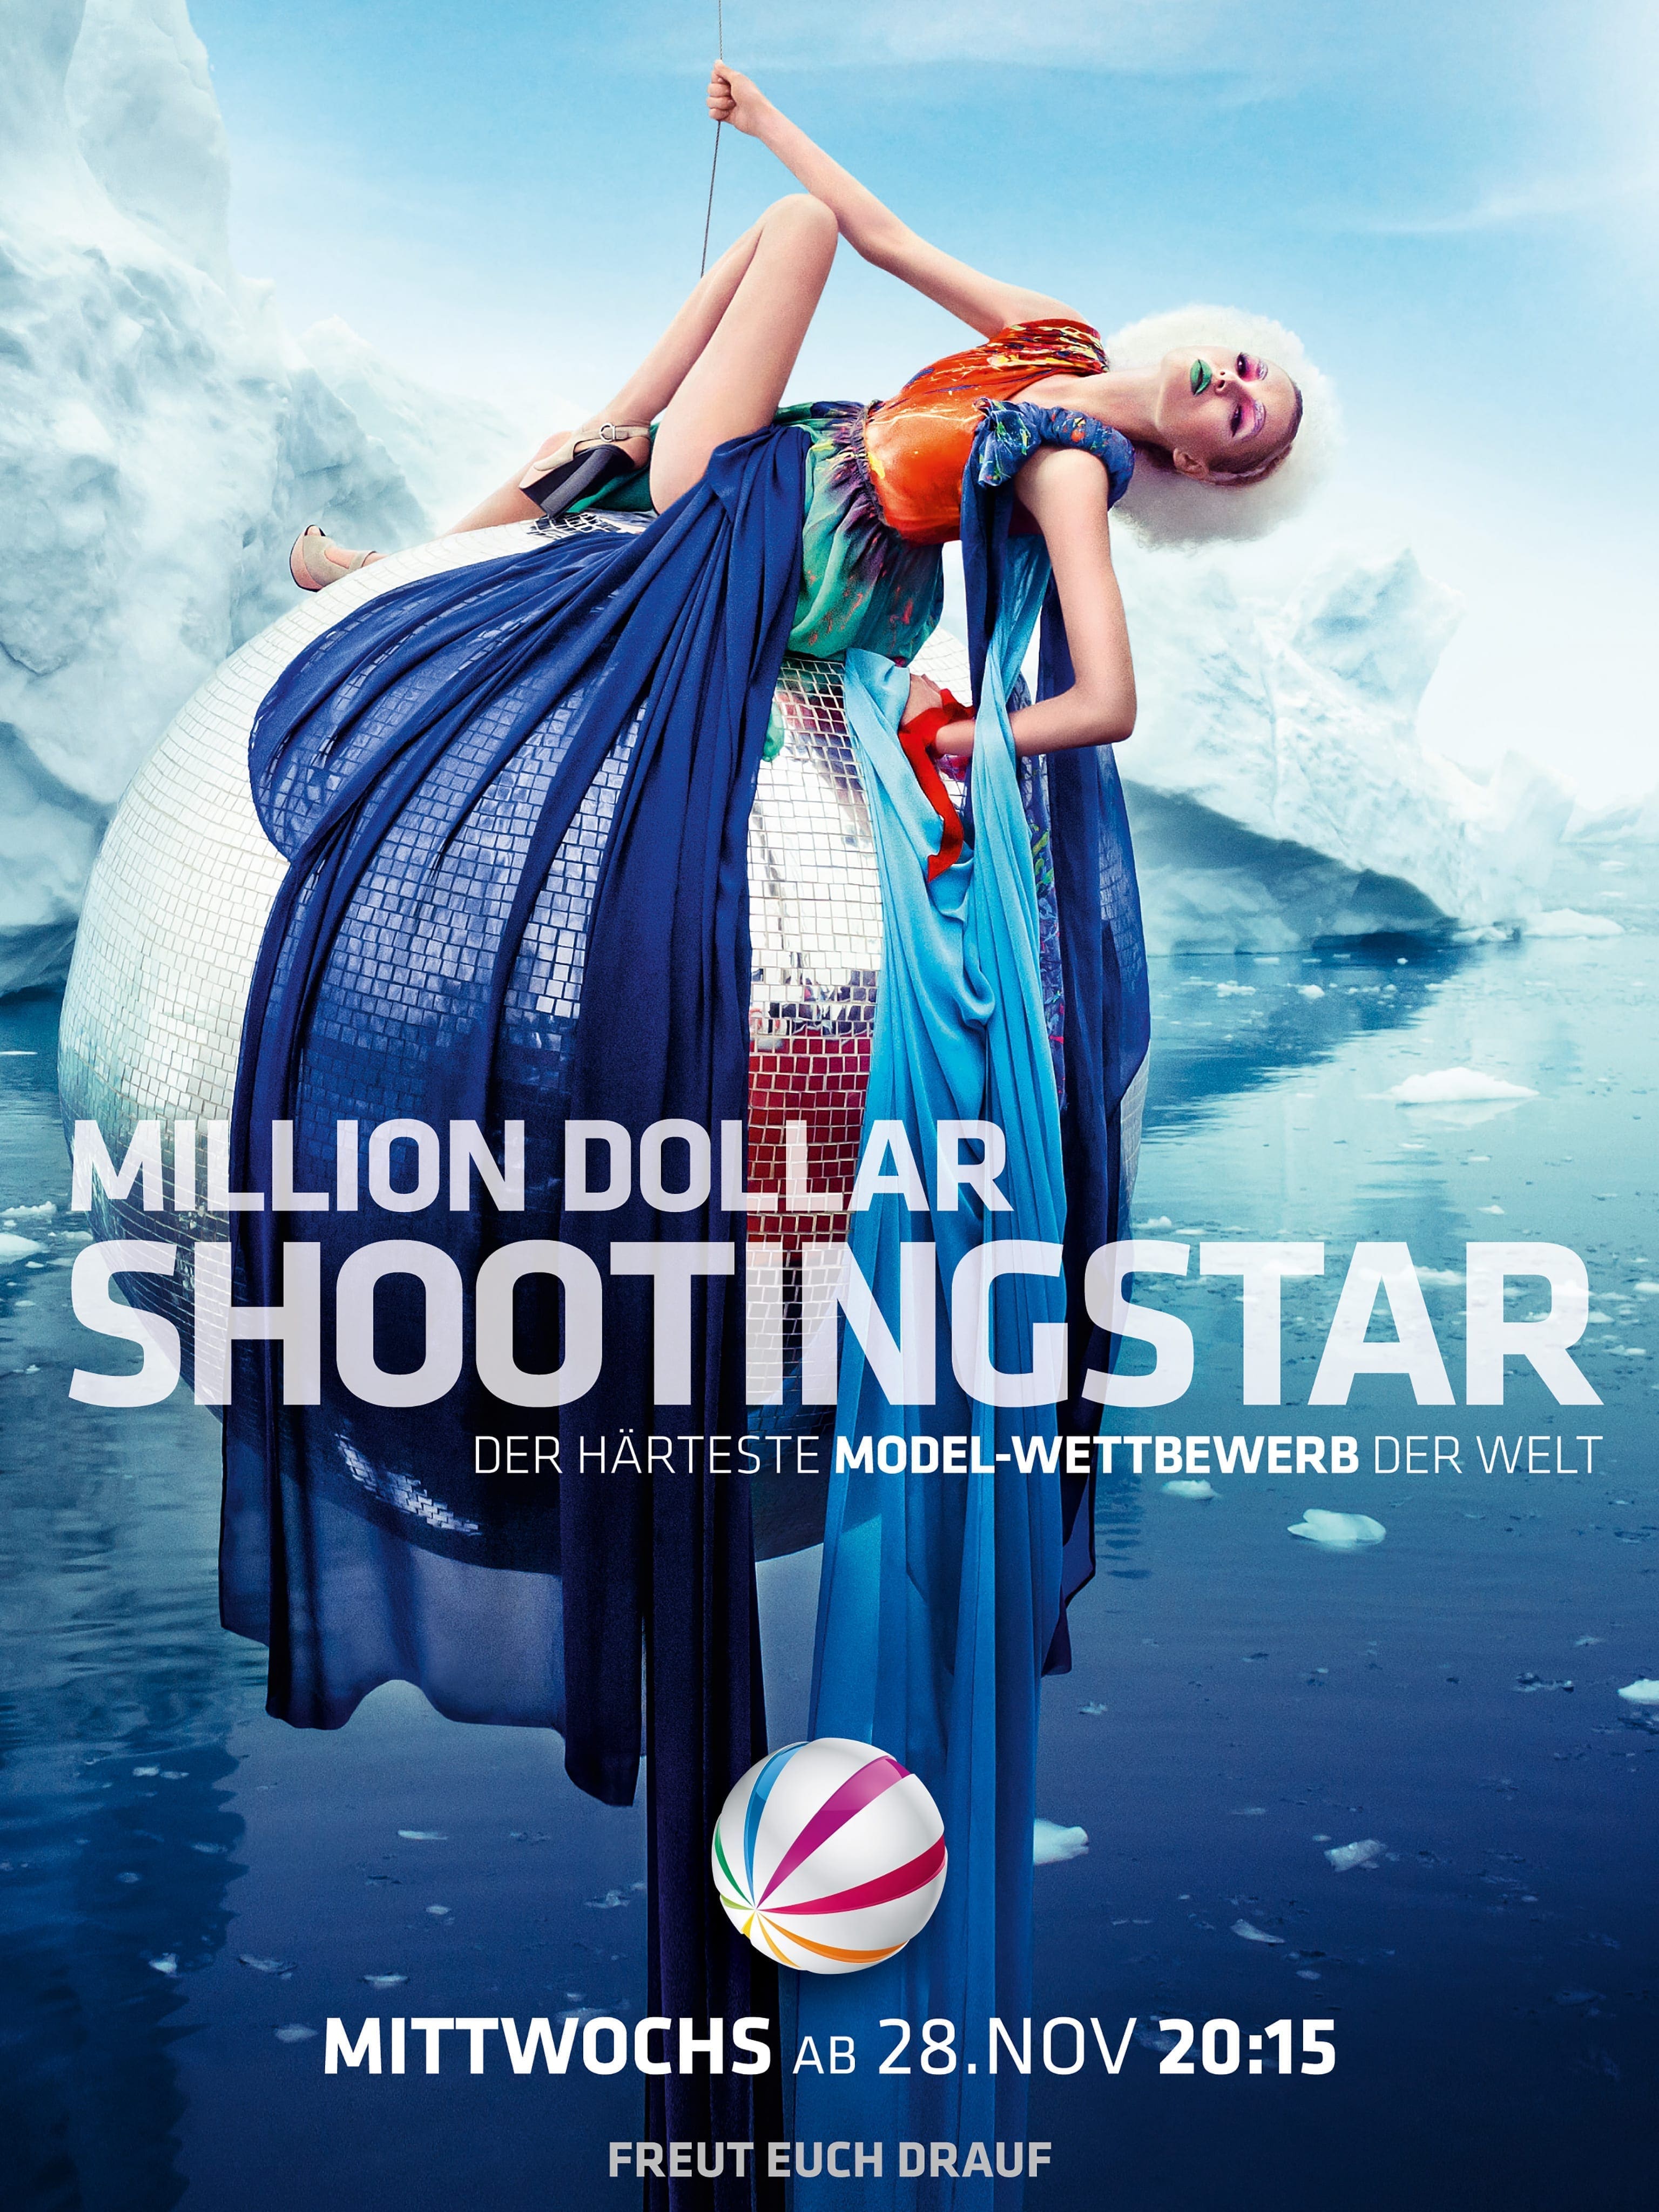 PROSIEBENSAT1_Million Dollar Shootingstar // AGENCY_ProSiebenSat1